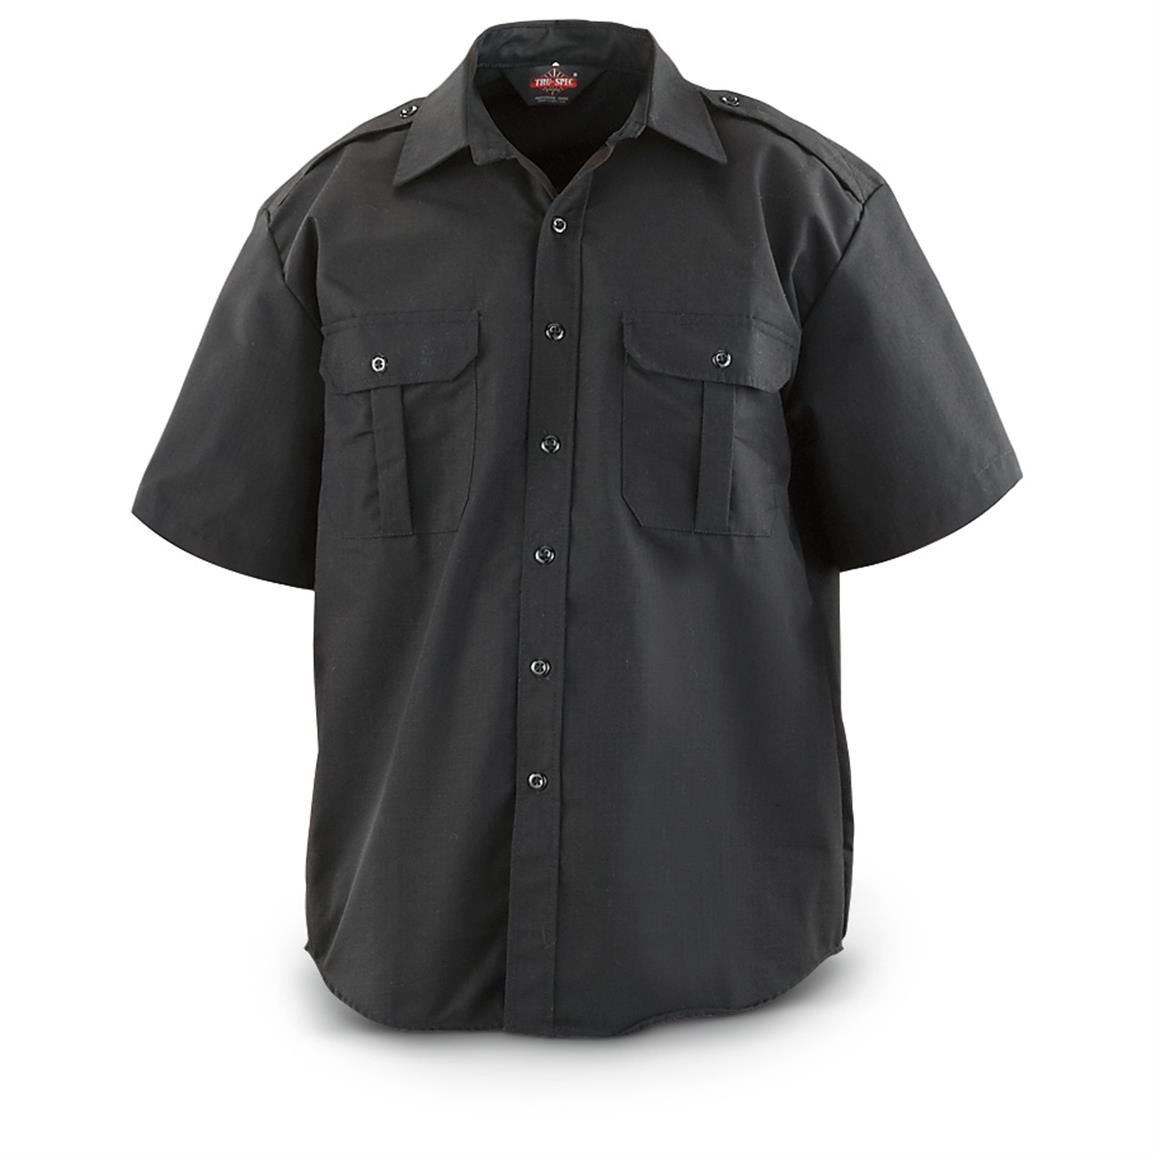 Black Military Design Short Sleeved Professional Tactical Dress Shirt